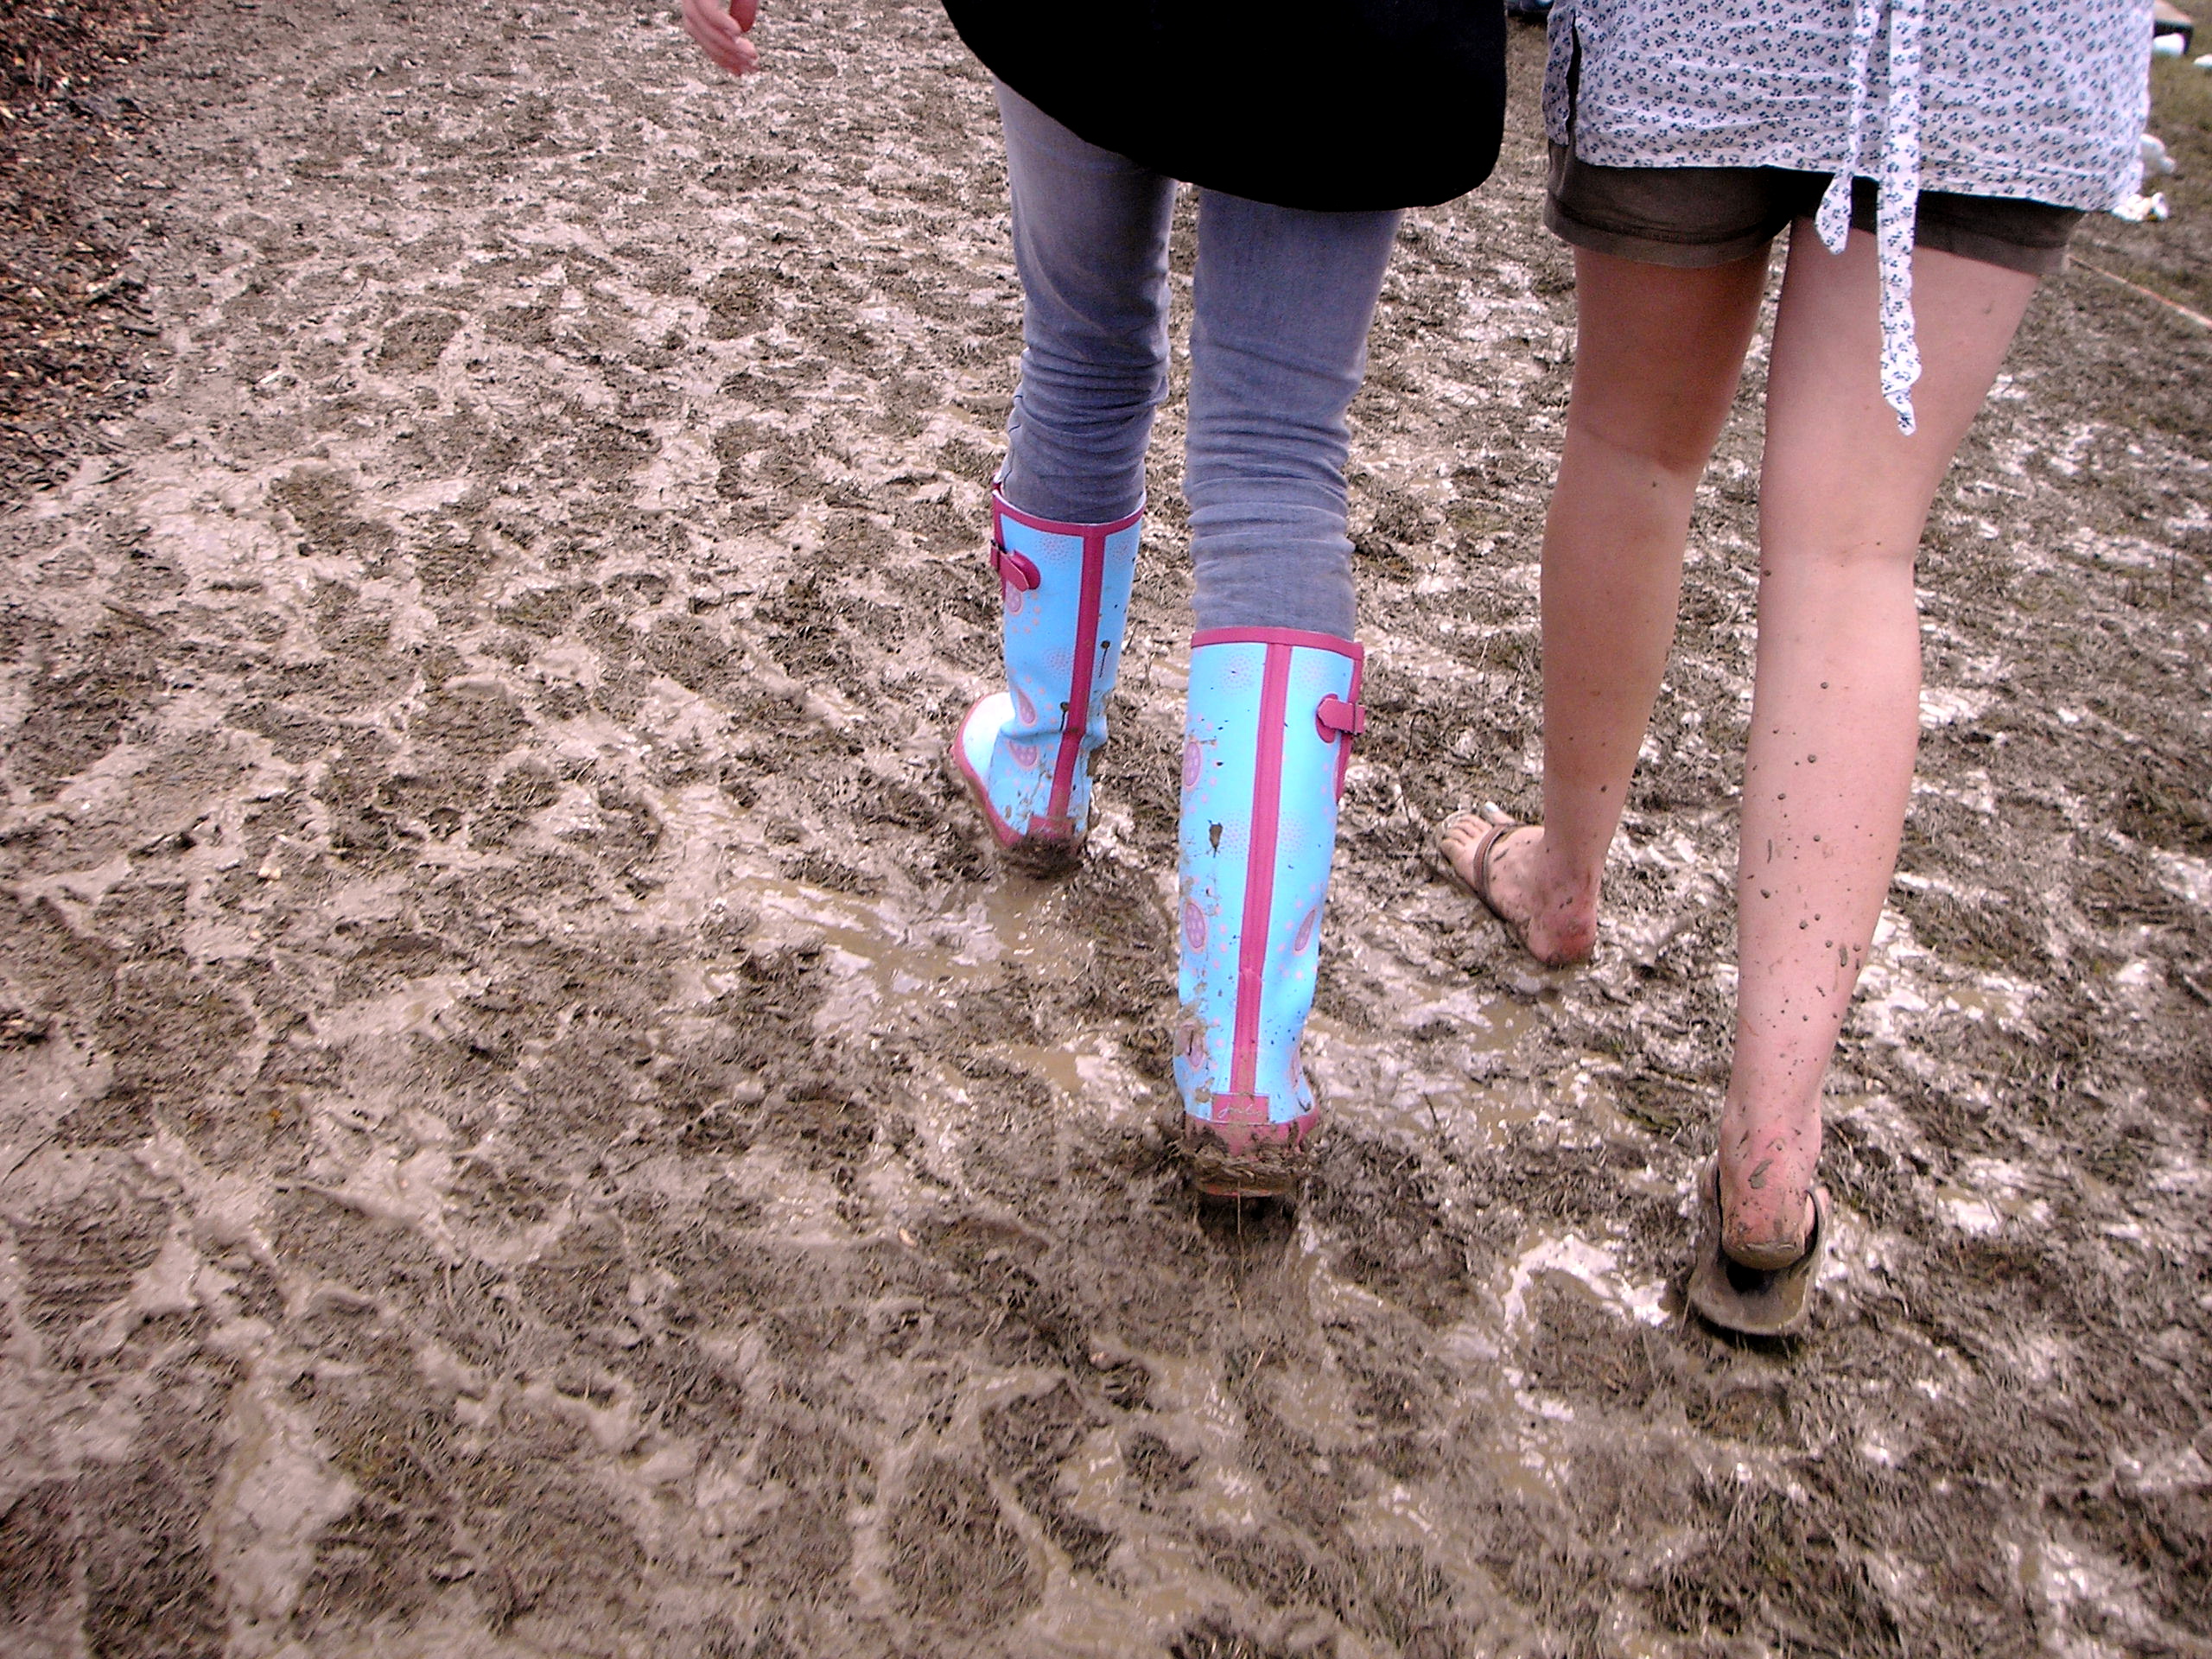 Festival-goers stuck in mud as Splendour in the Grass ends